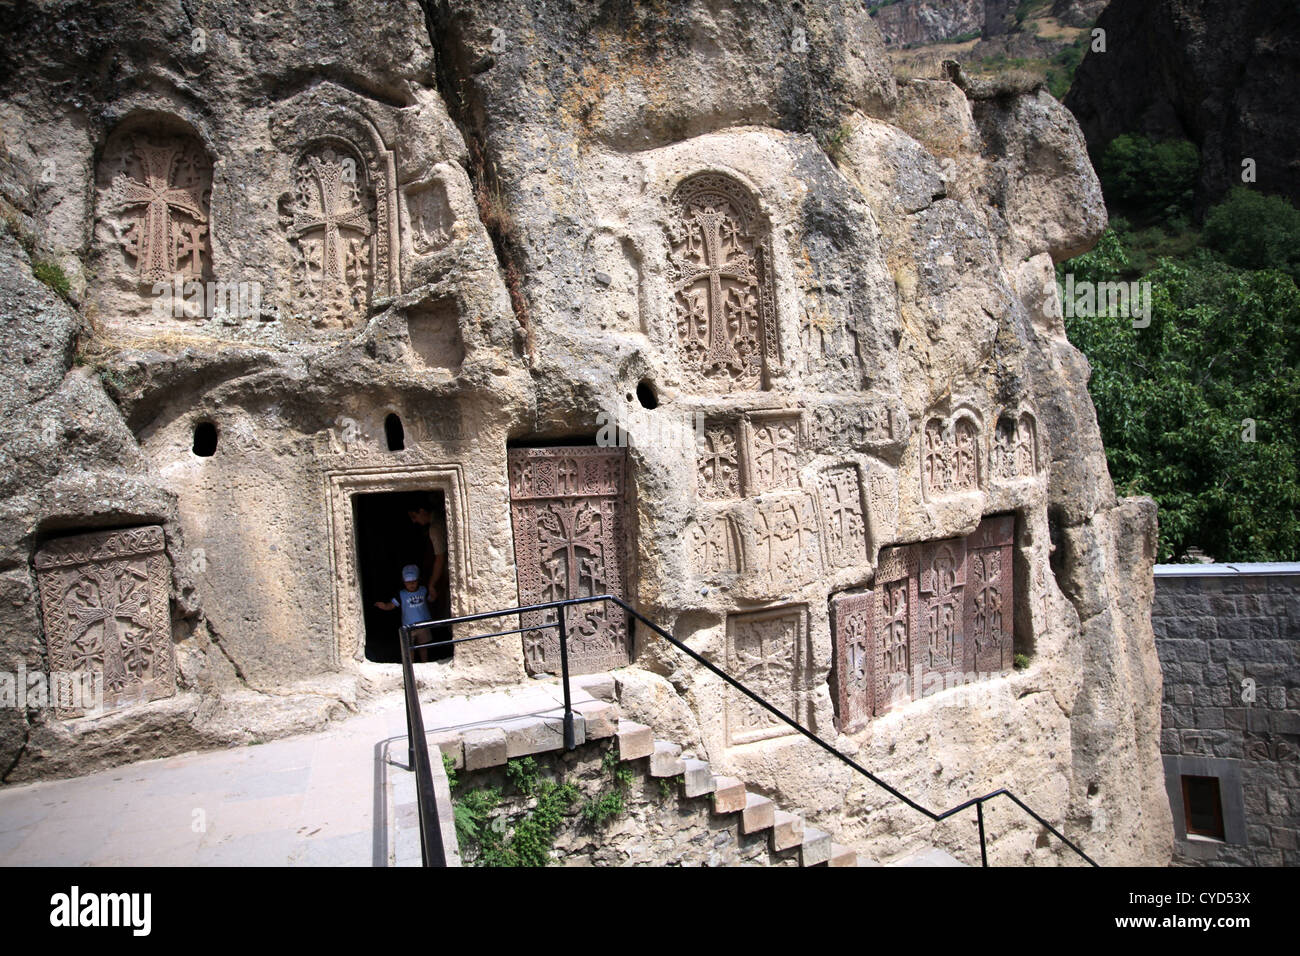 khatchkars-and-entrance-to-a-monastic-cell-at-geghard-monastery-armenia-CYD53X.jpg